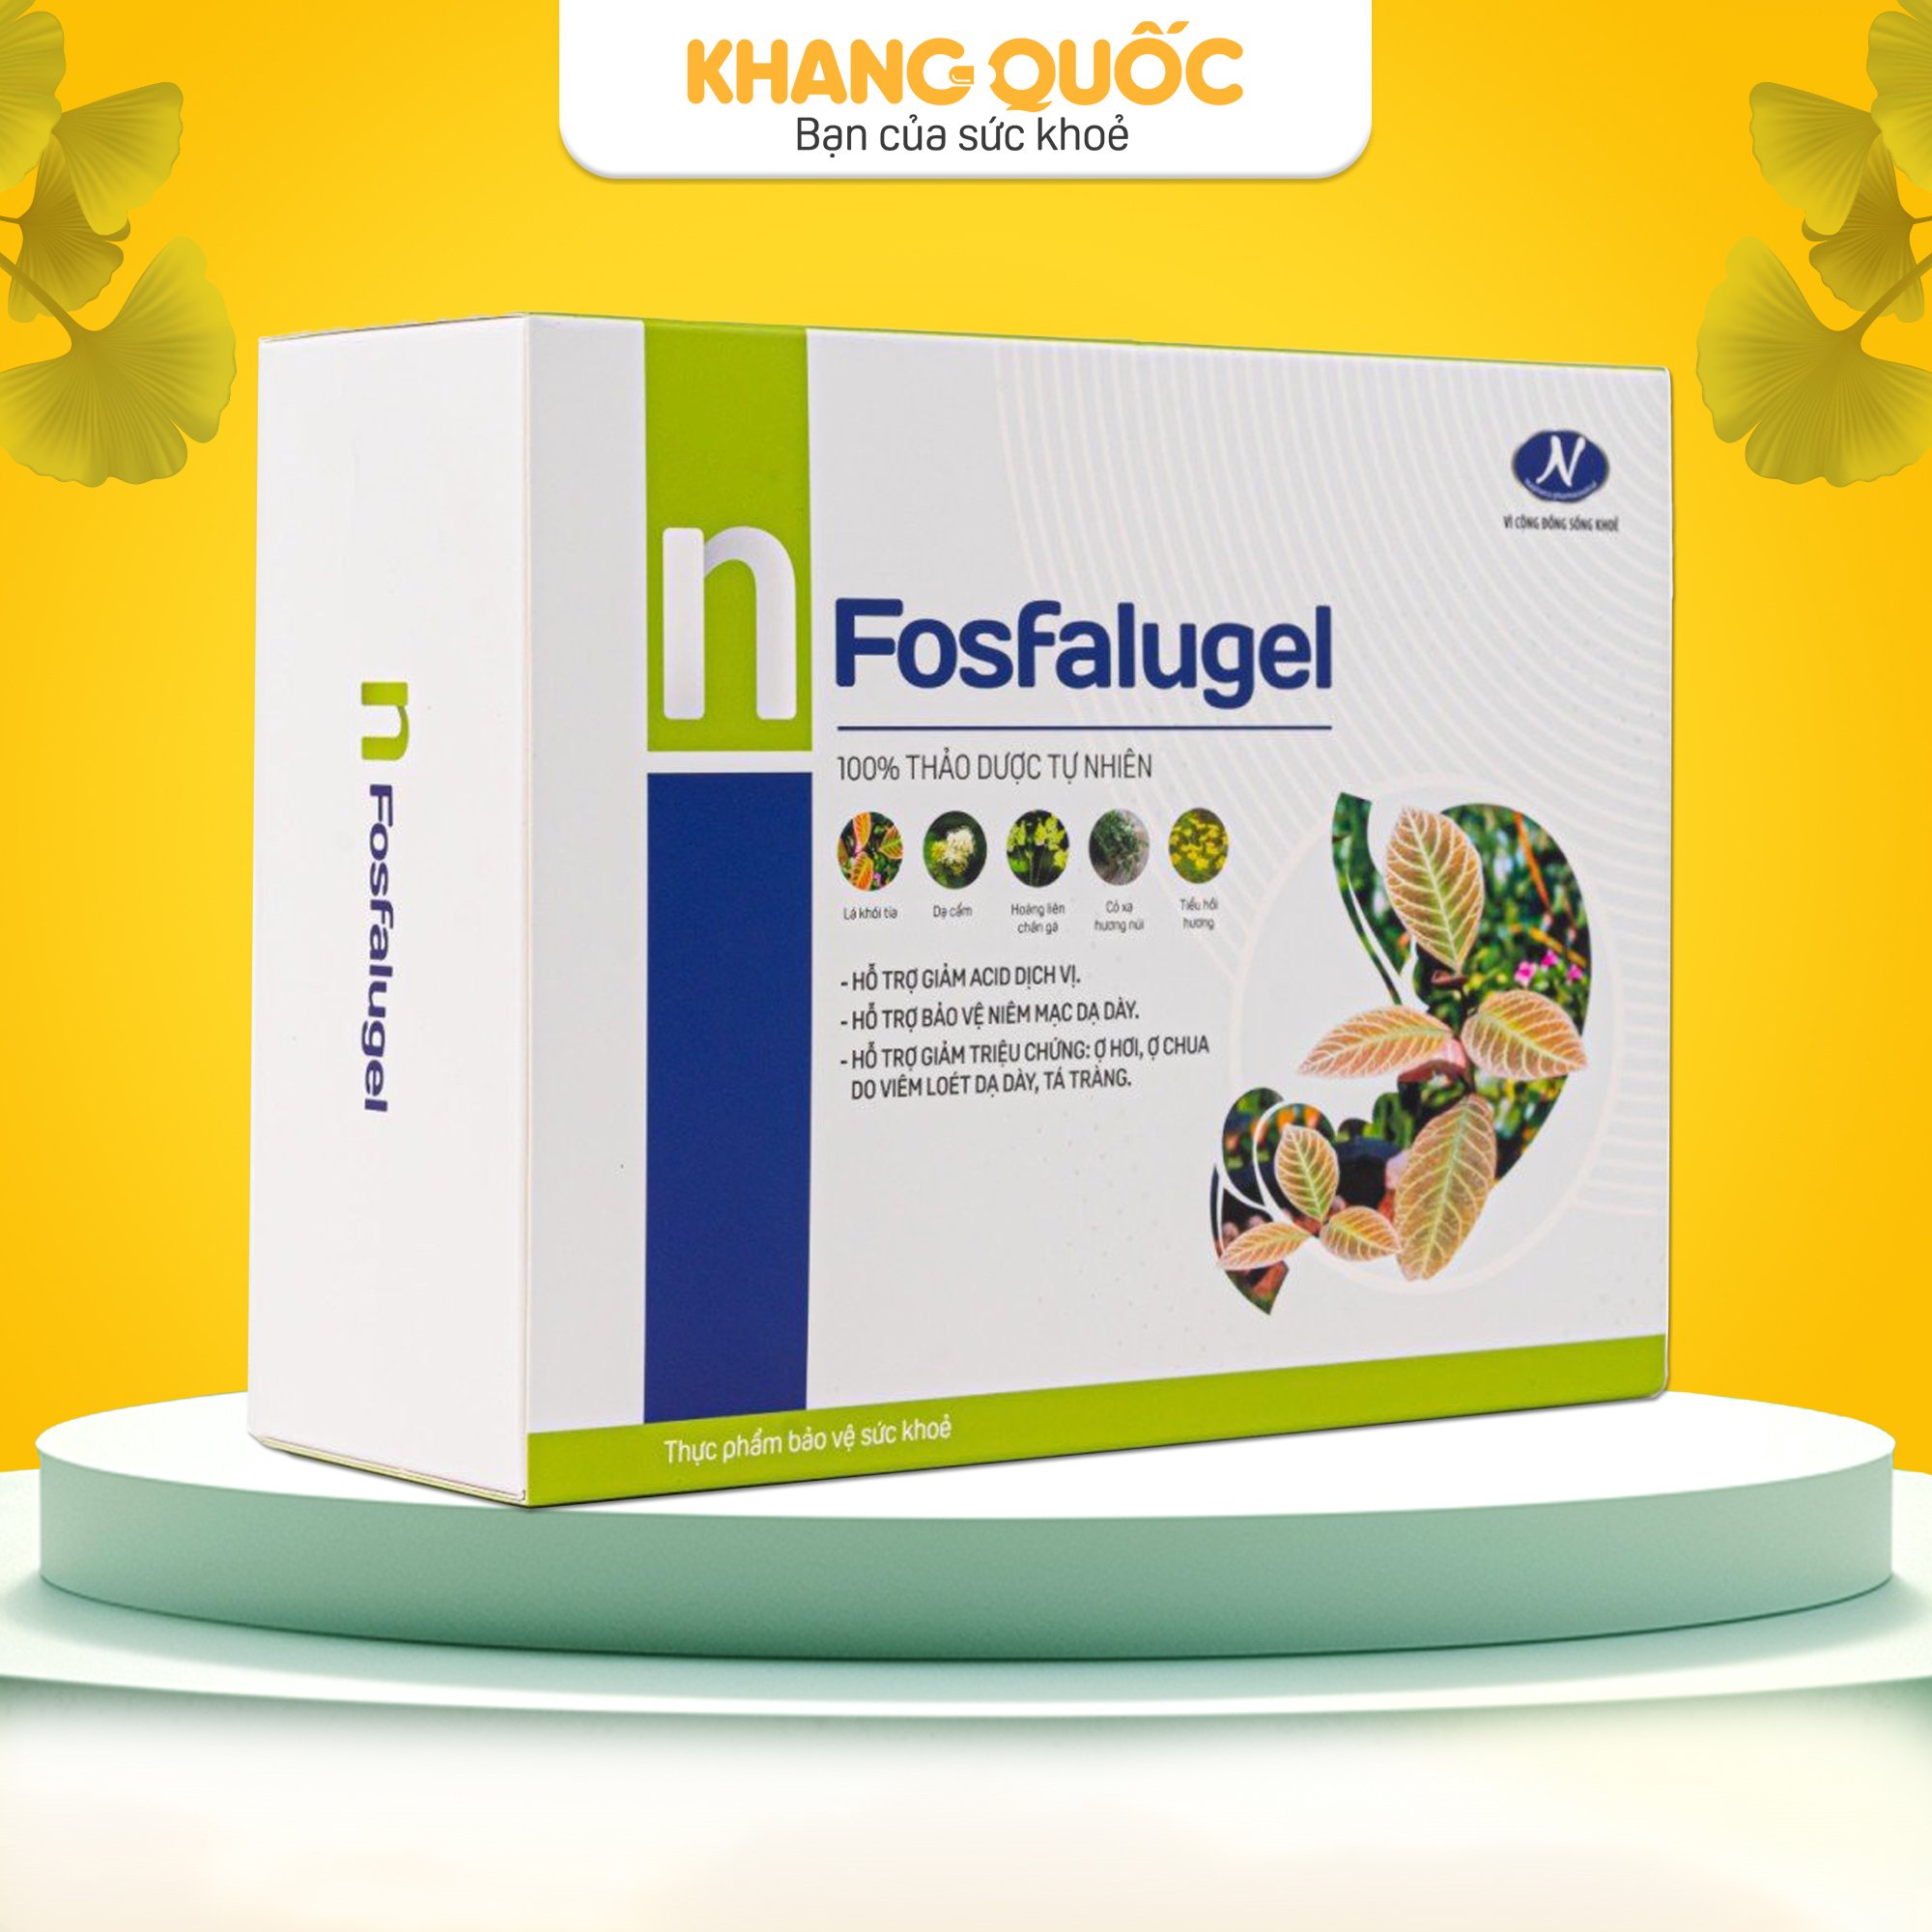 Fosfalugel - Hỗ trợ giảm đau dạ dày